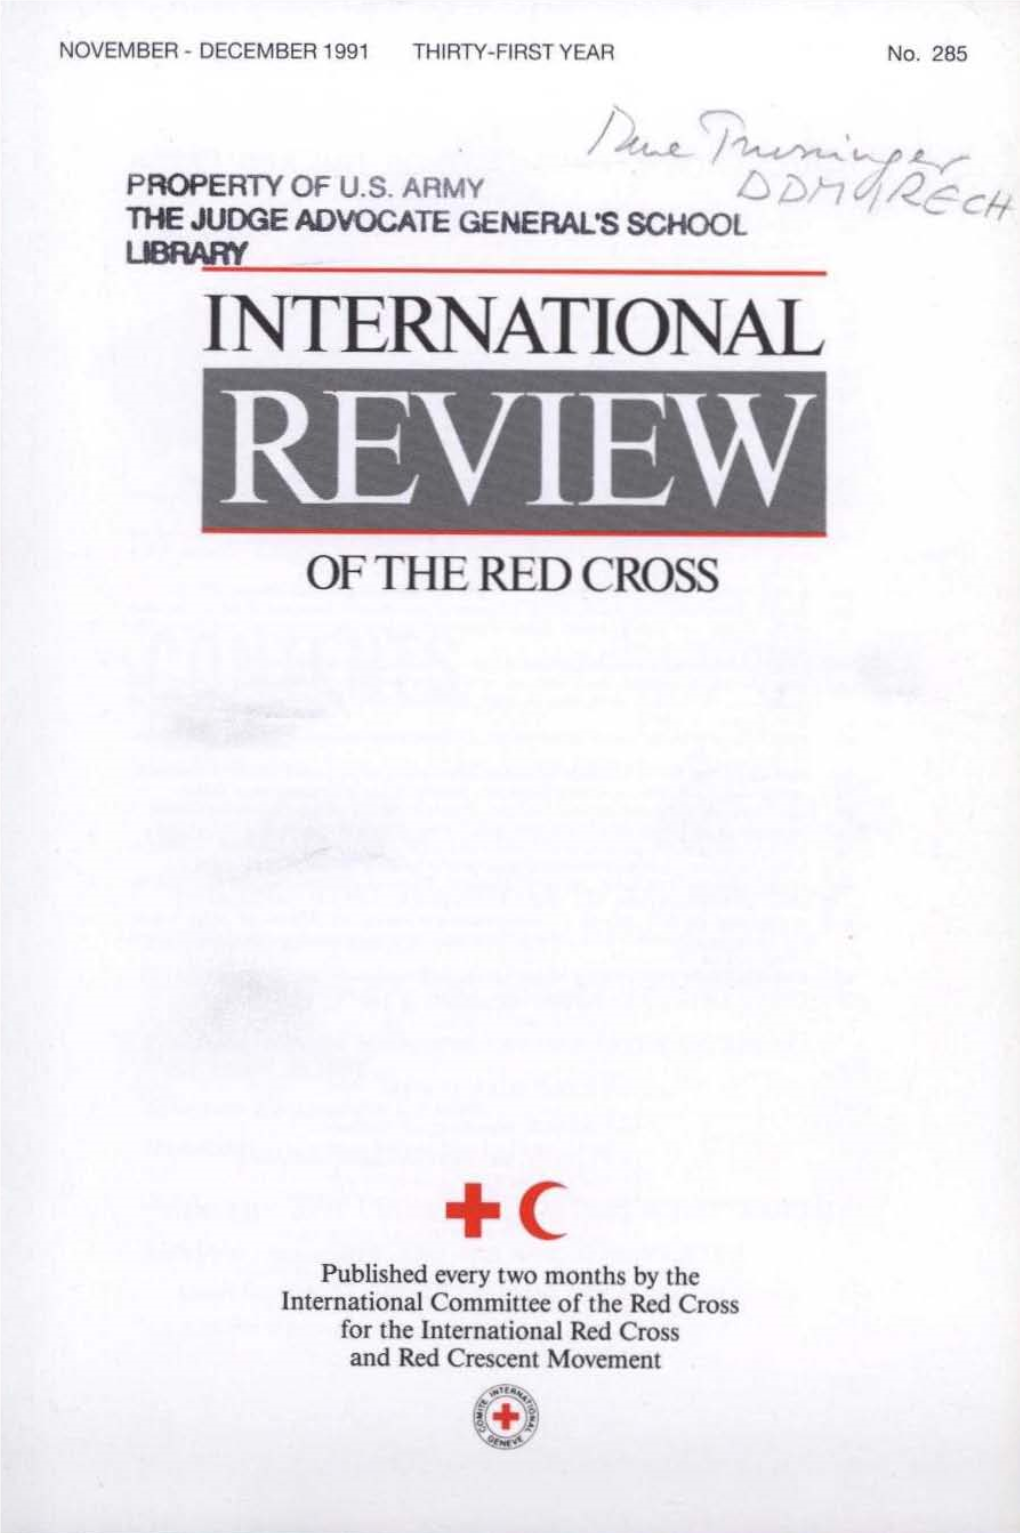 International Review of the Red Cross, November-December 1991